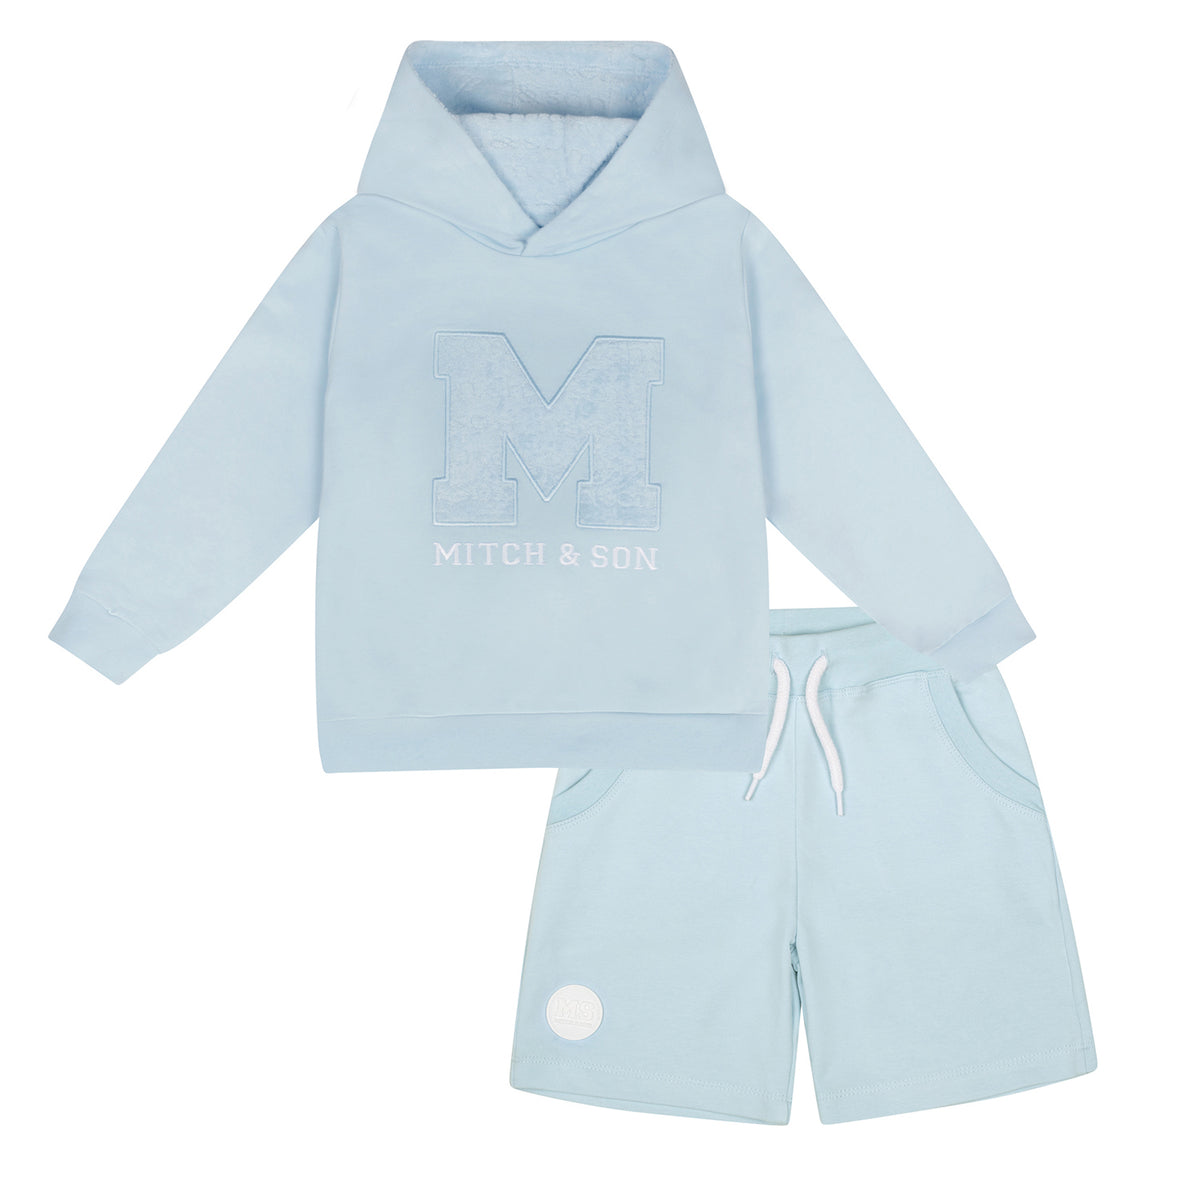 Mitch & Son Boys 'Tommy' Blue Hooded Shorts Set